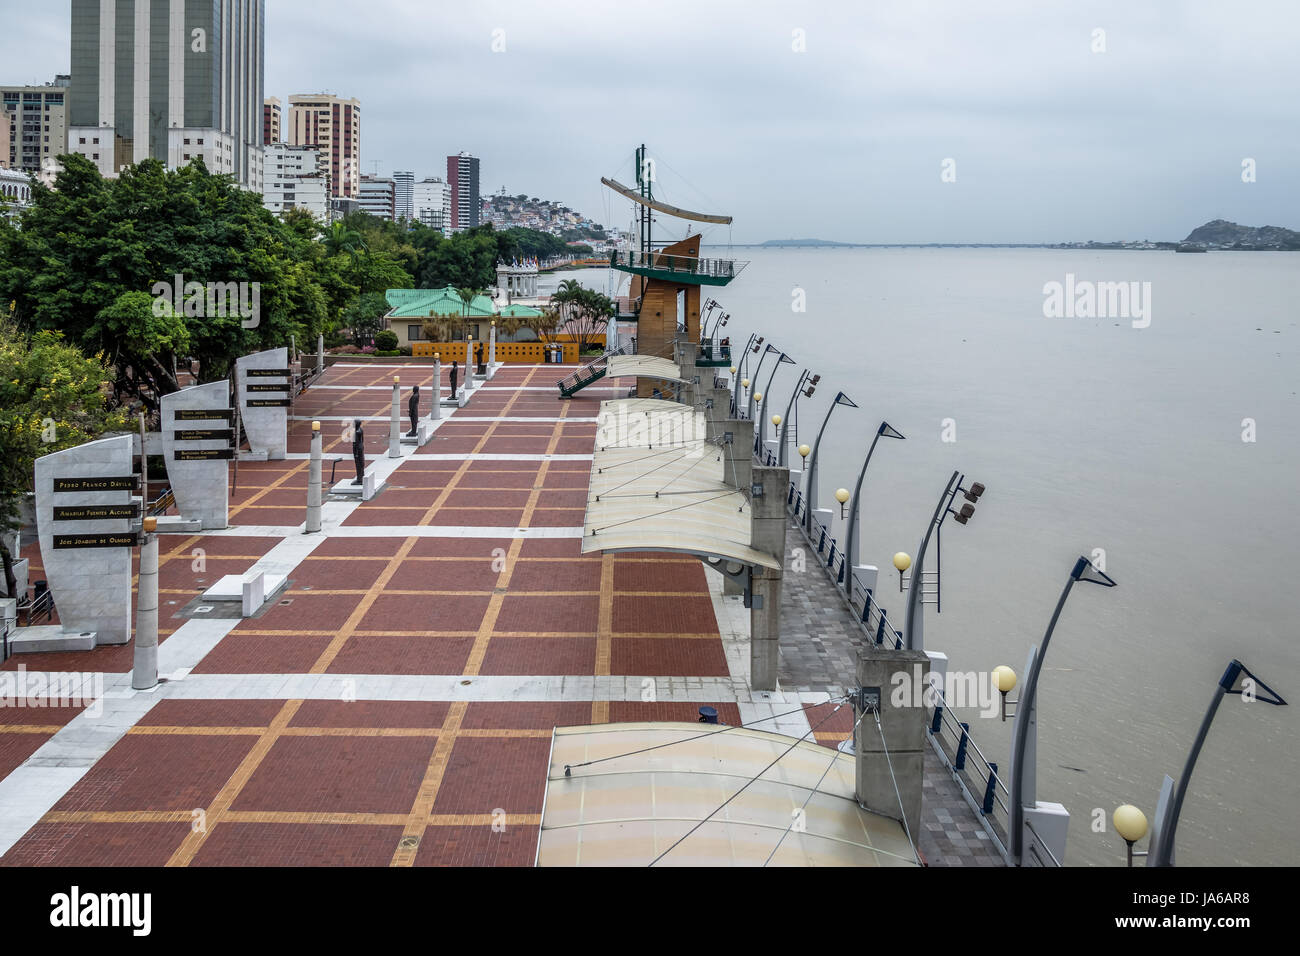 View of Malecon 2000 waterfront promenade - Guayaquil, Ecuador Stock Photo